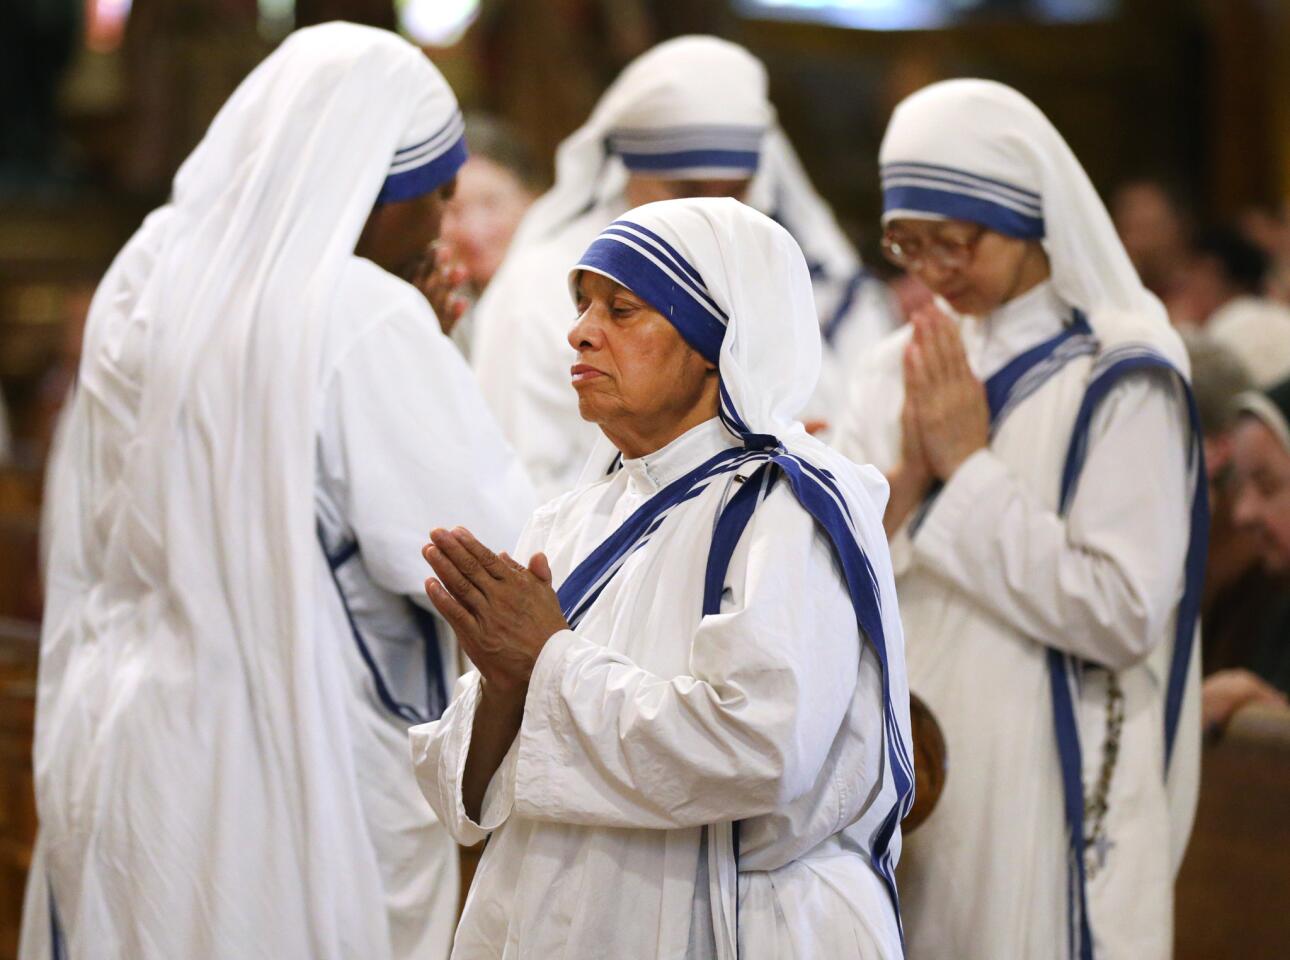 Prayerful nuns